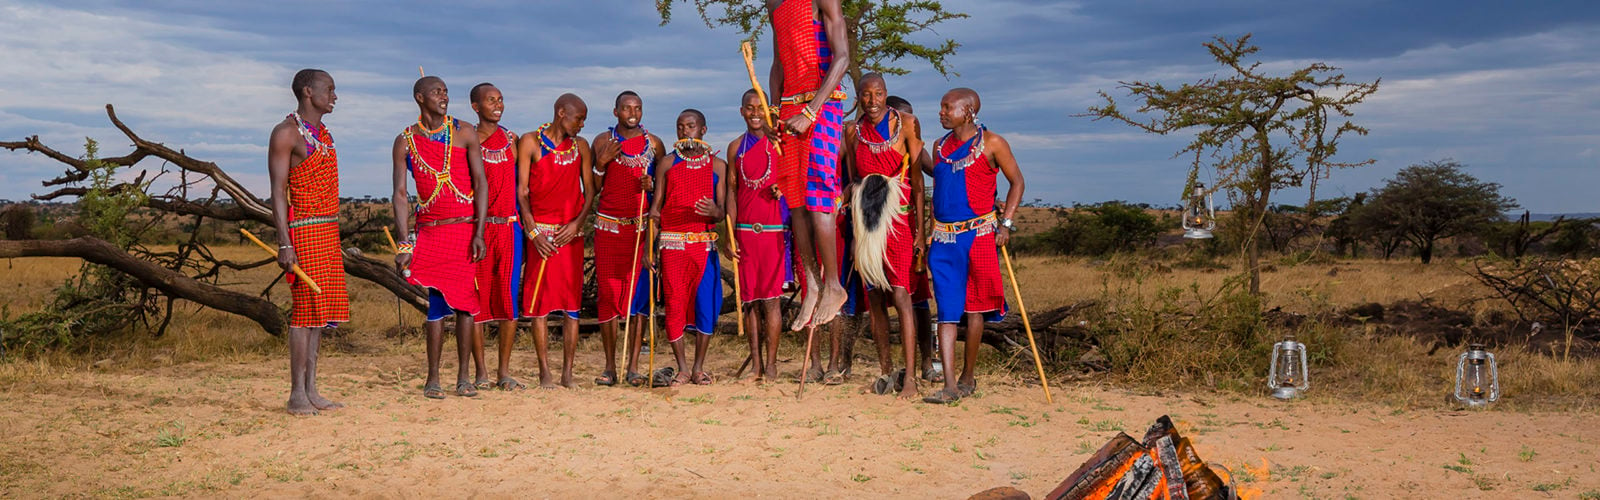 Maasai Tribe dancing, Kenya.